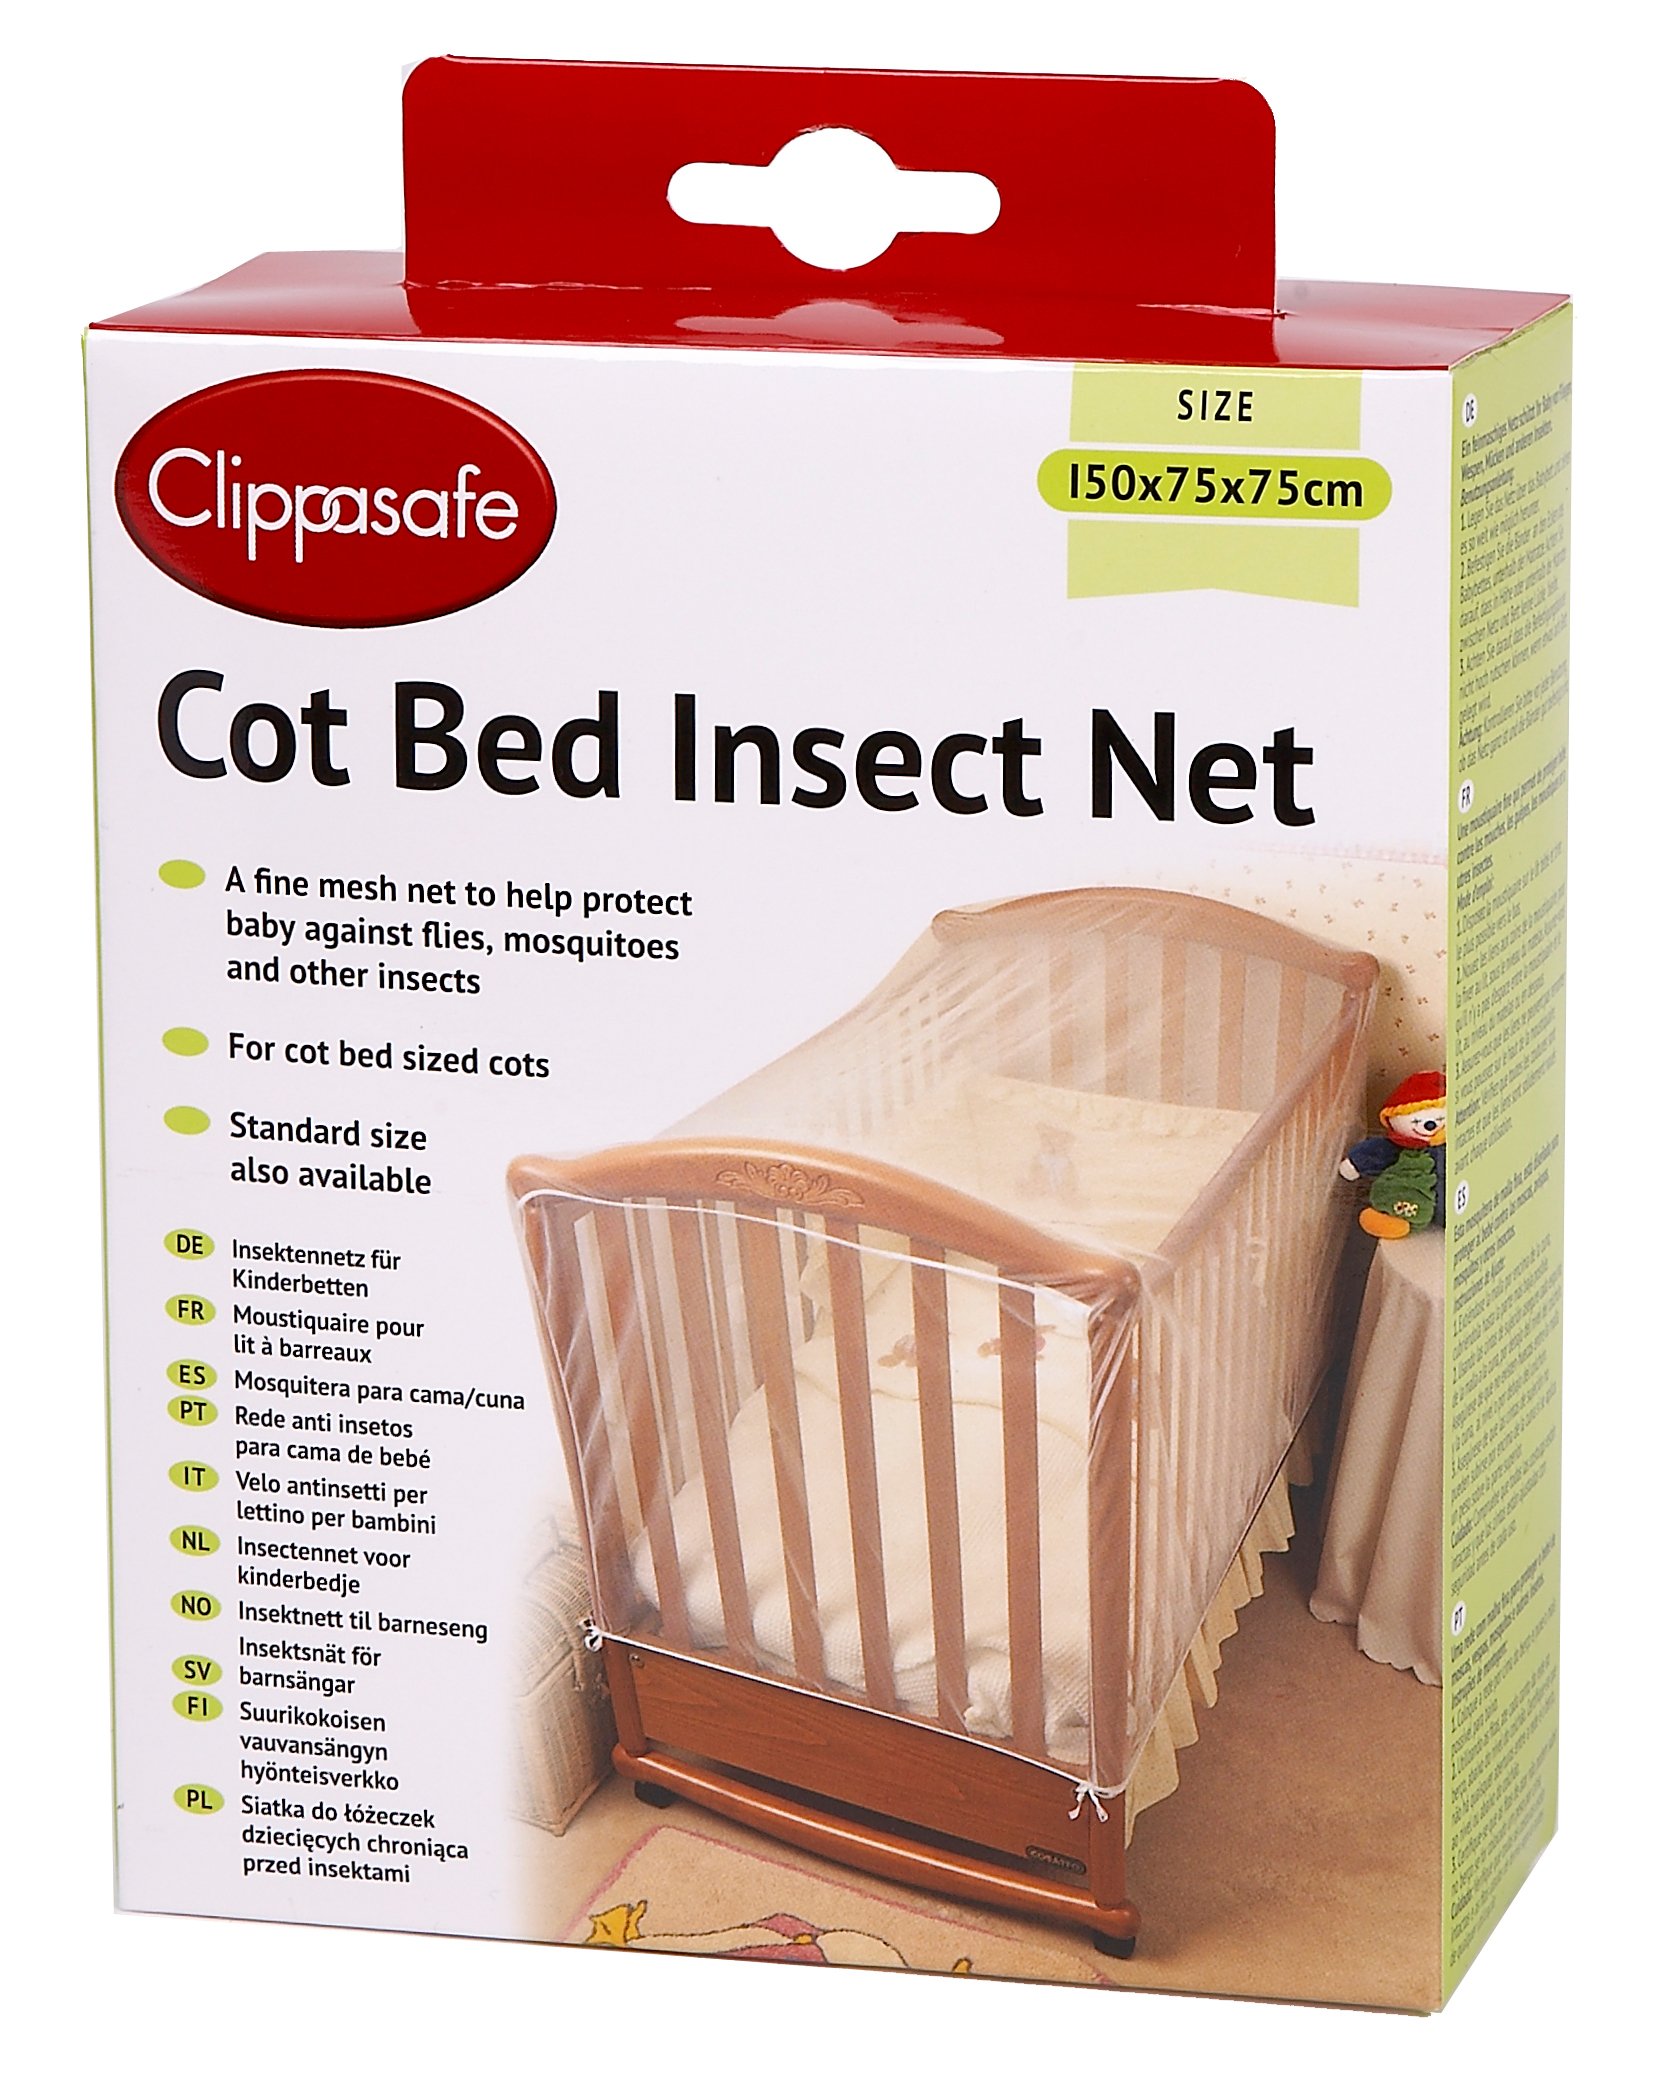 Clippasafe Kinderbett Insektennetz, Groß (150 x75x75cm)